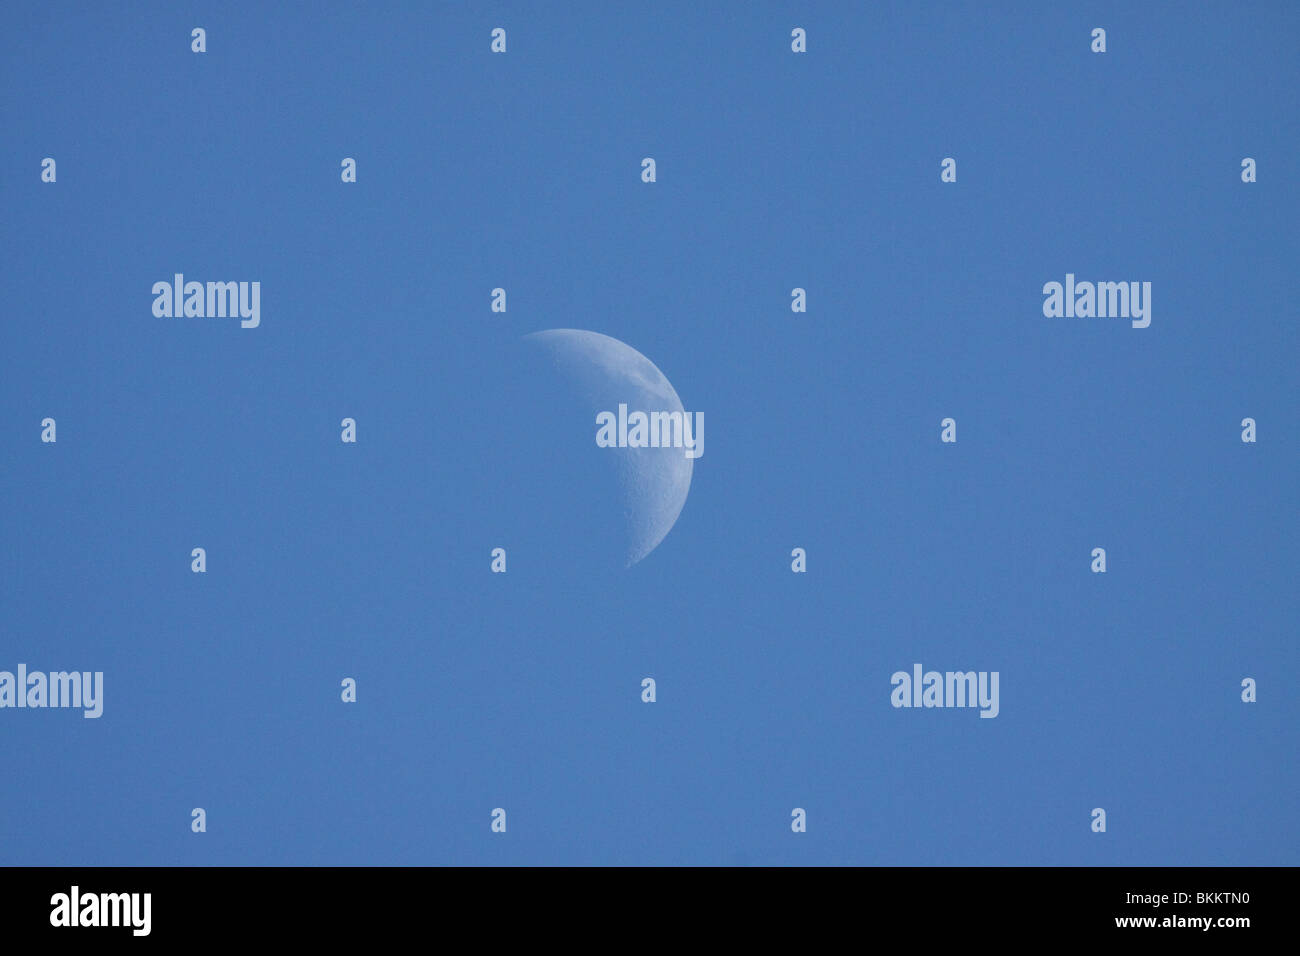 half moon lunar satellite celestial body Stock Photo